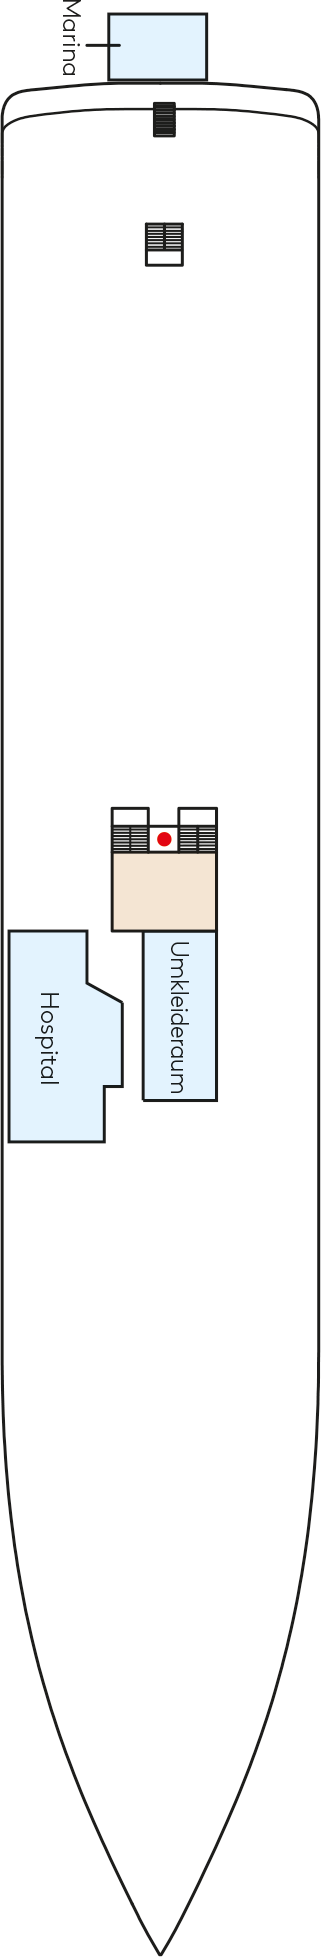 Deck 3 (Deck Nr. 3)